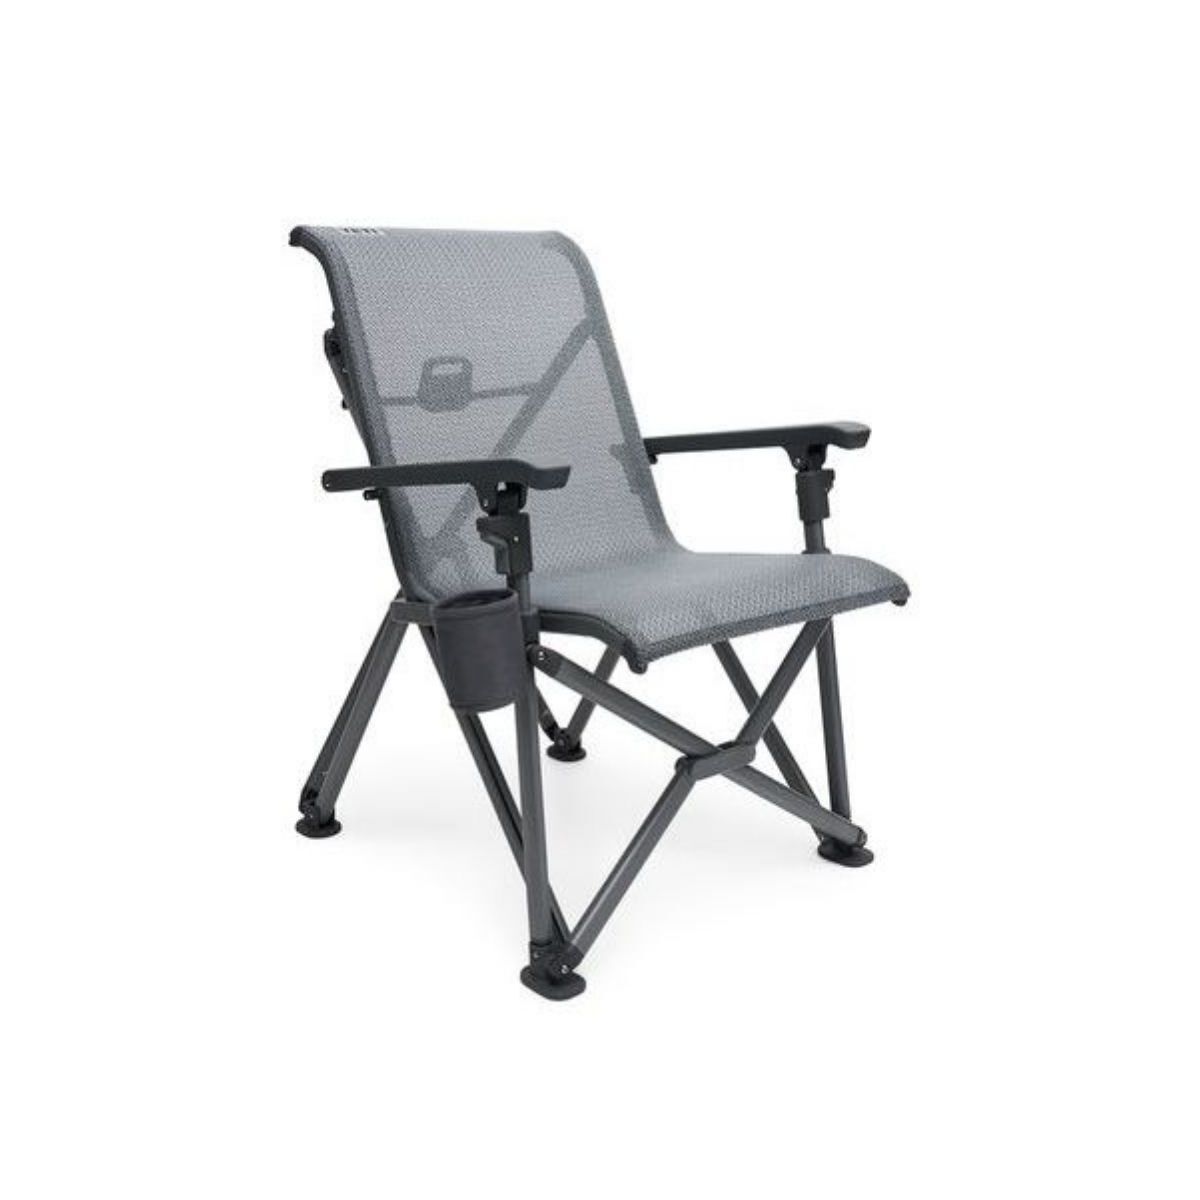 Yeti Trailhead Camp Chair - Campingstuhl